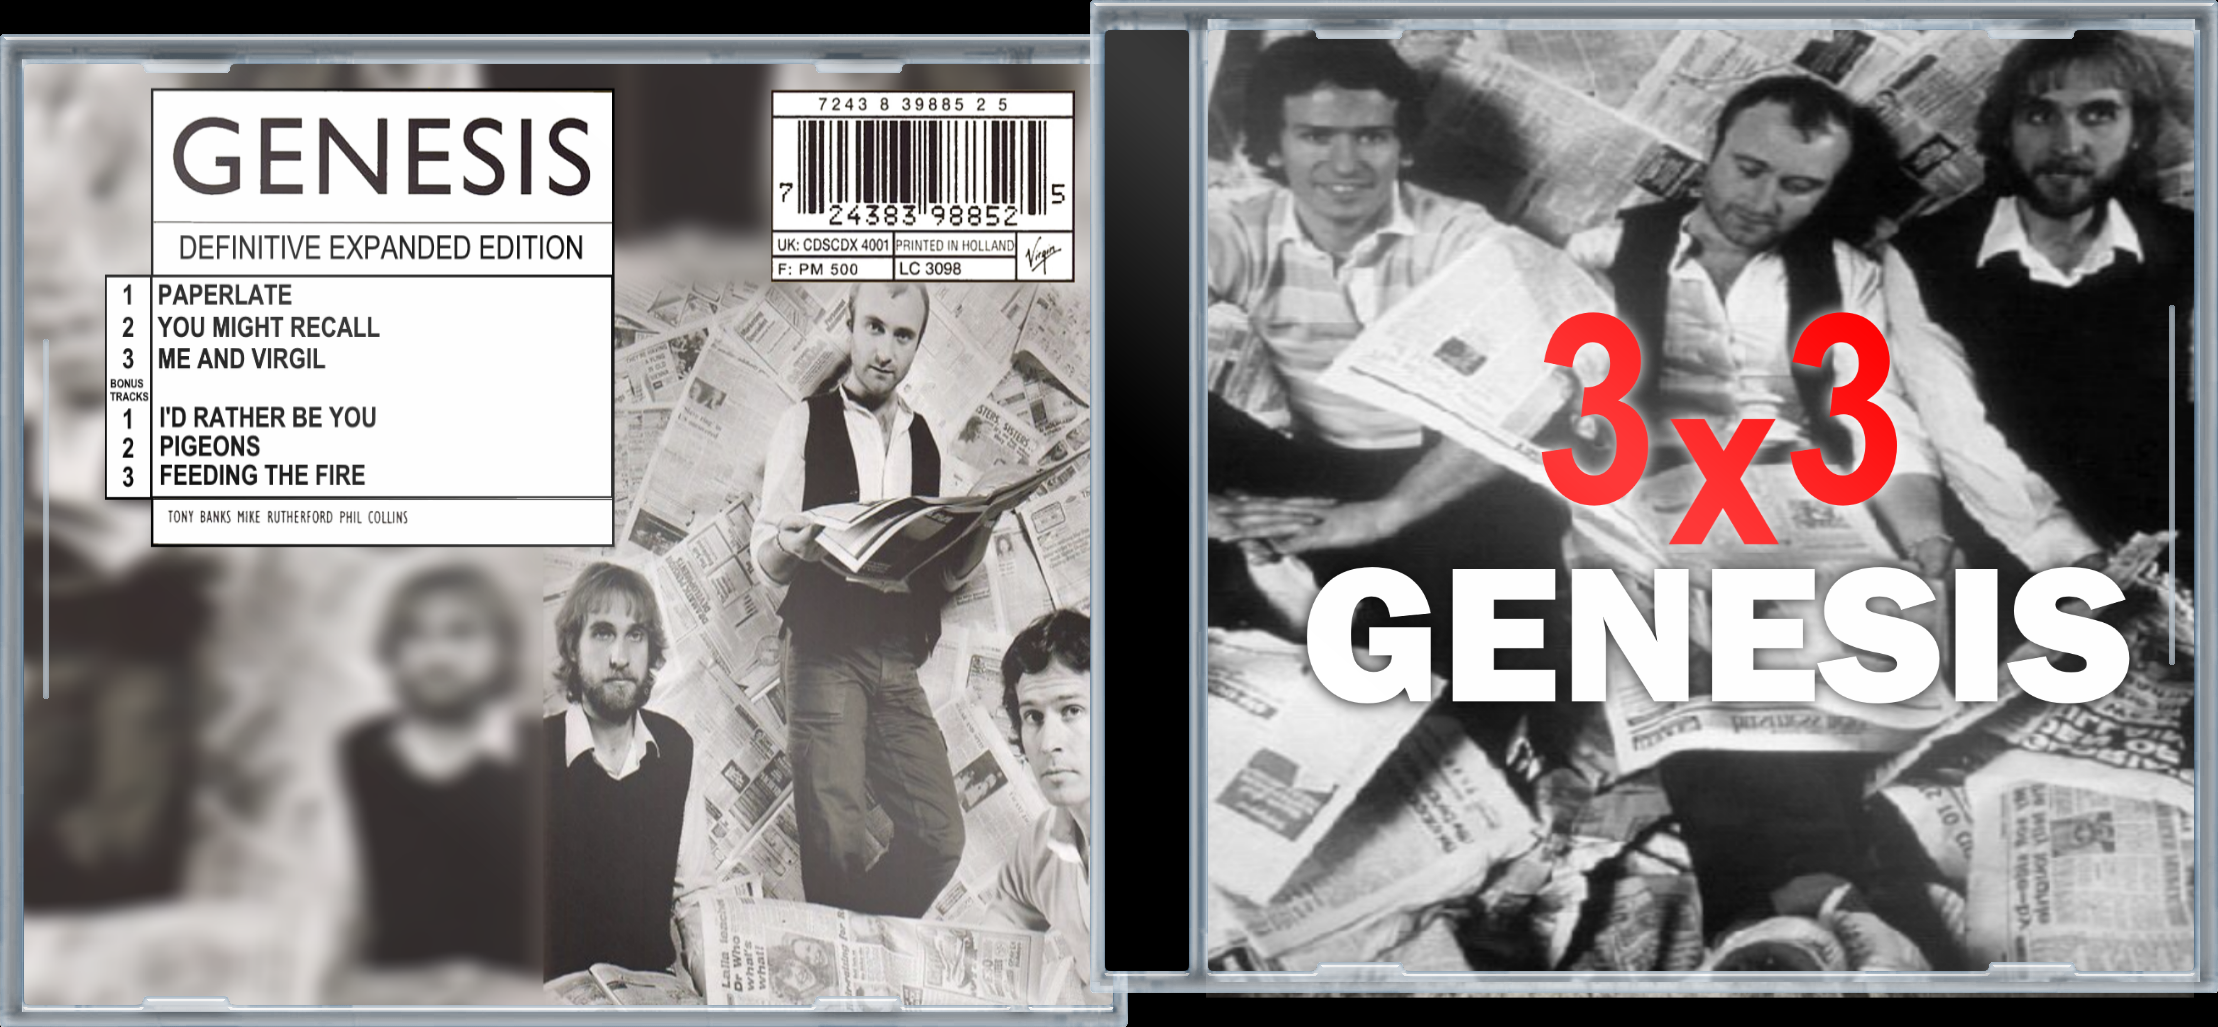 Genesis - 3x3 box cover